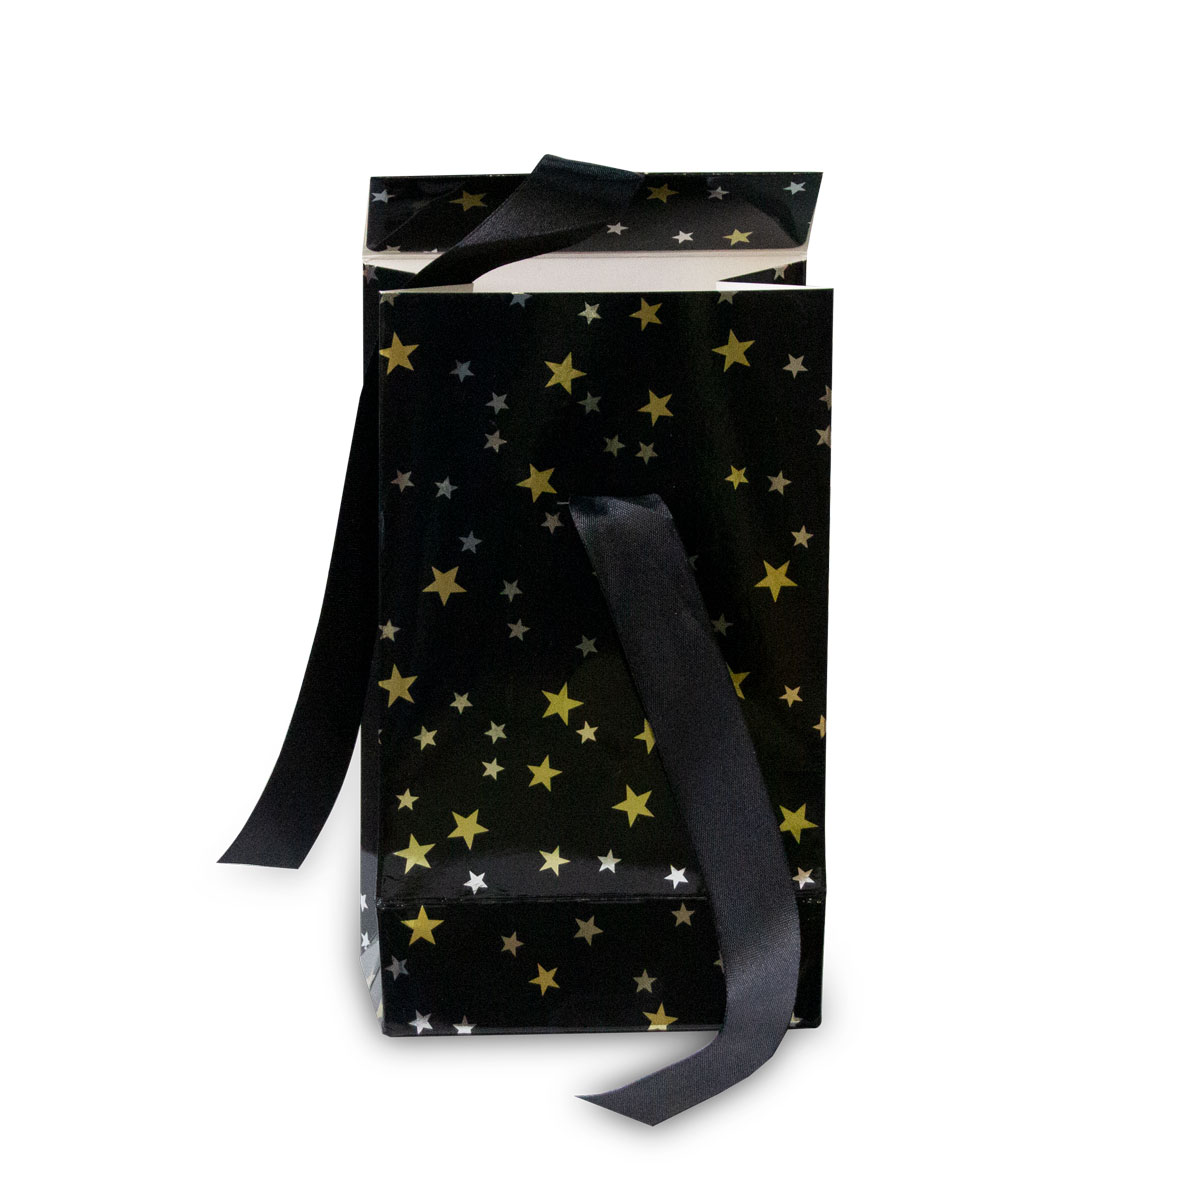 Luxury paper Christmas gift bags - Stars